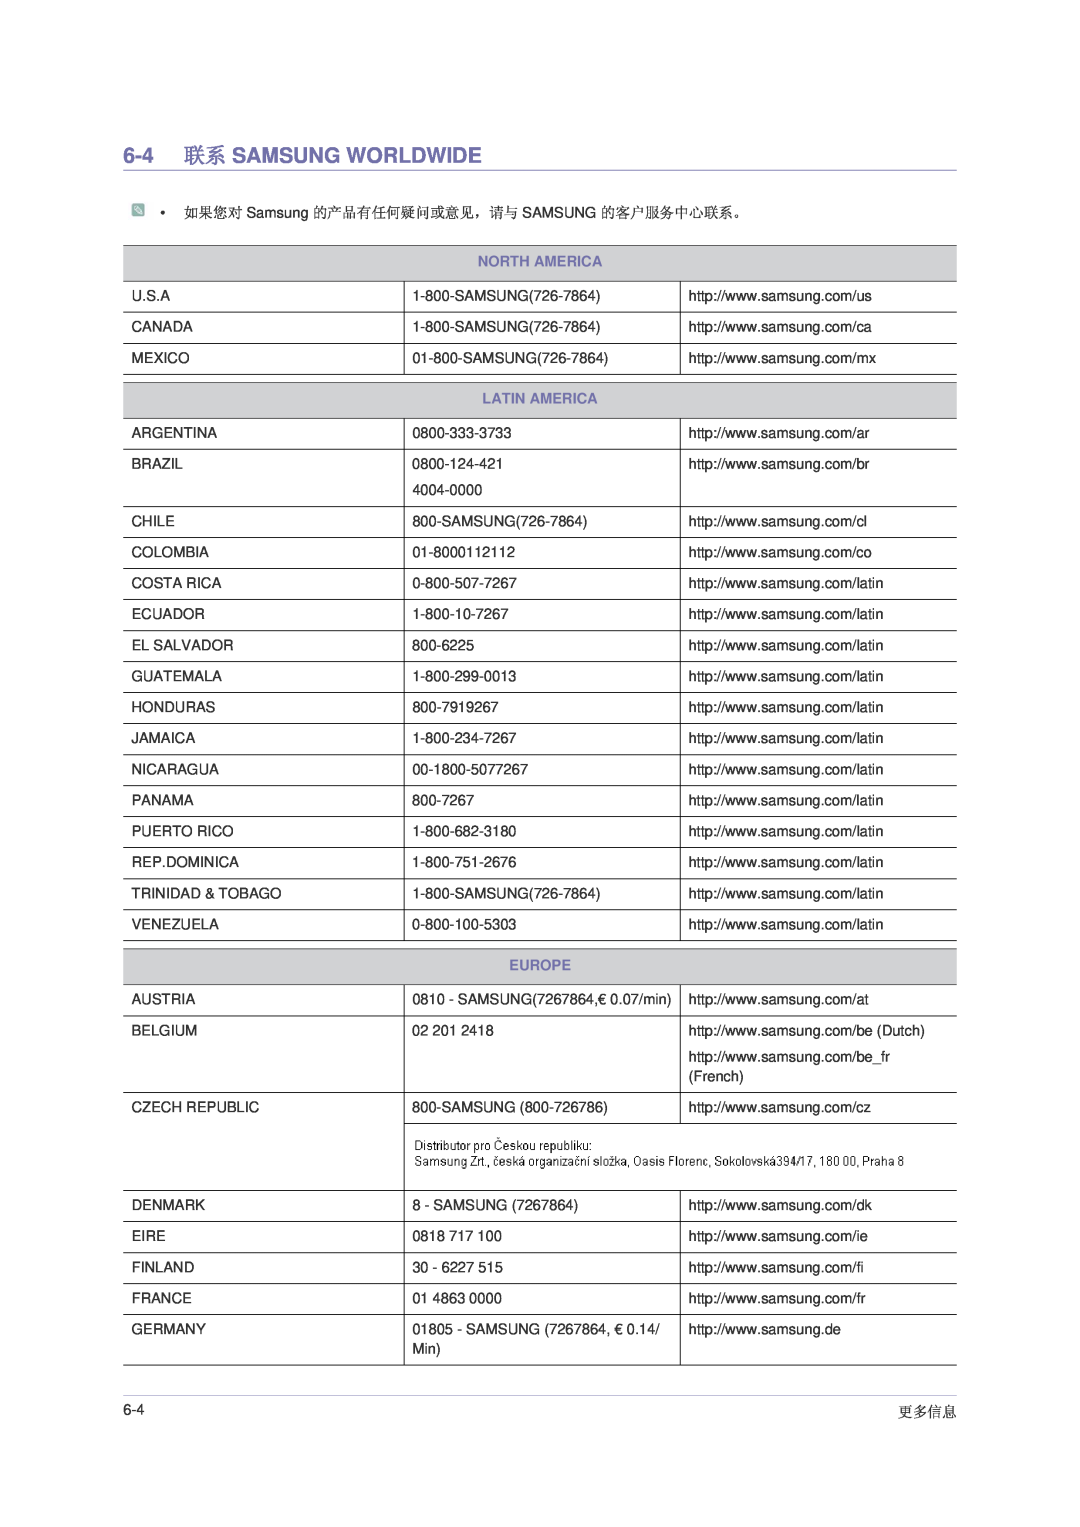 Samsung LS22PUHKF/EN, LS24PUHKFV/EN, LS22PUHKFV/ZW manual 6-4 联系 SAMSUNG WORLDWIDE, North America, Latin America, Europe 